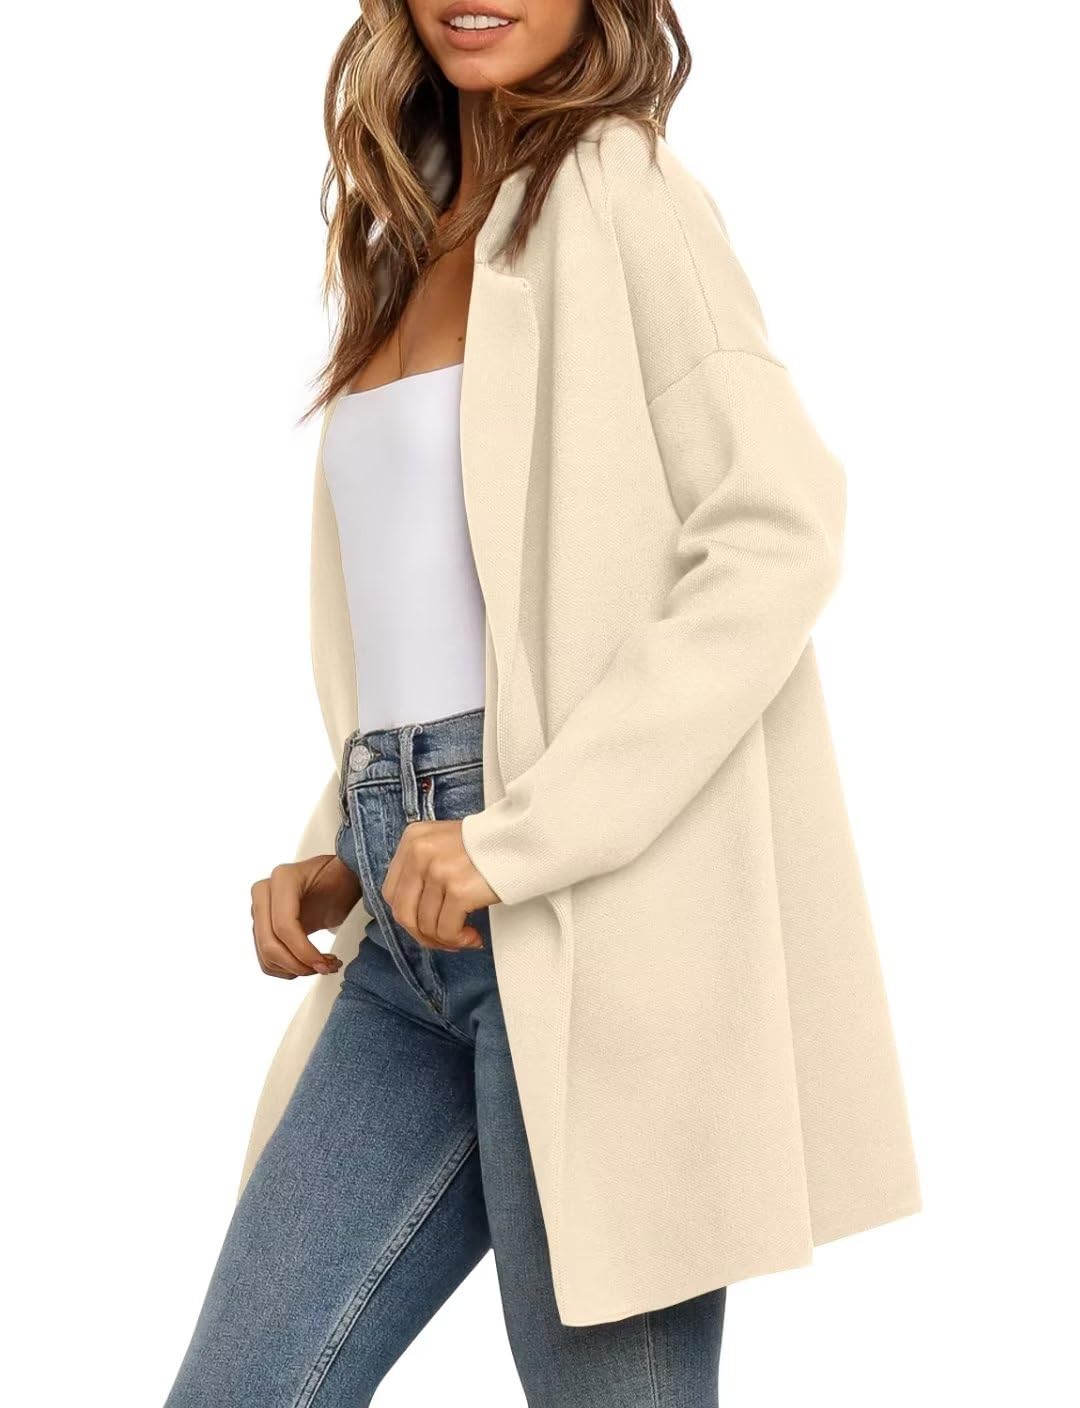 ZOLUCKY Women's Open Front Knit Cardigan Long Sleeve Lapel Casual Solid Classy Sweater Jacket